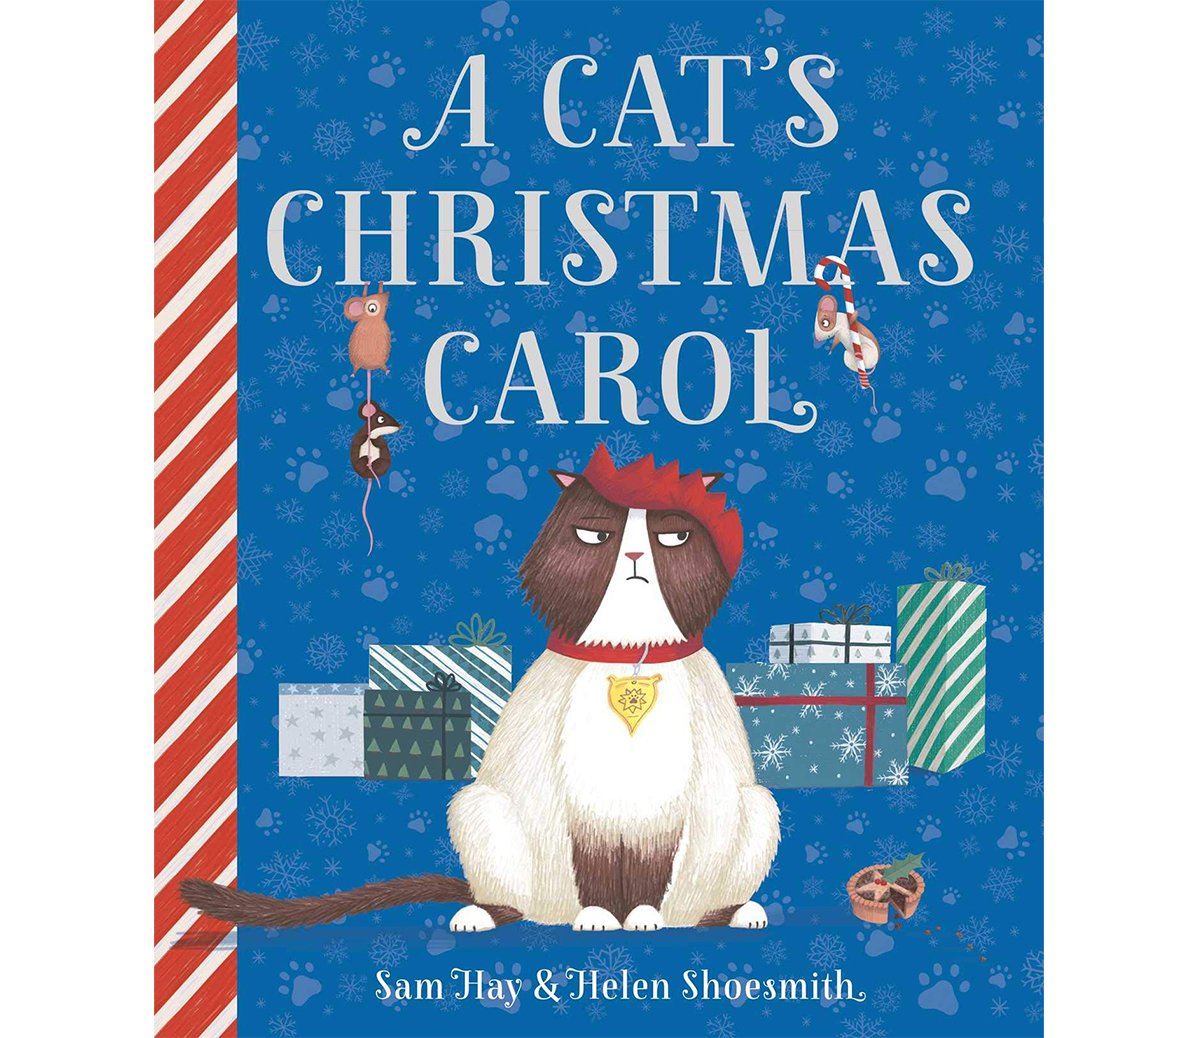 helen-shoesmith-cats-christmas-carol-cover.jpg